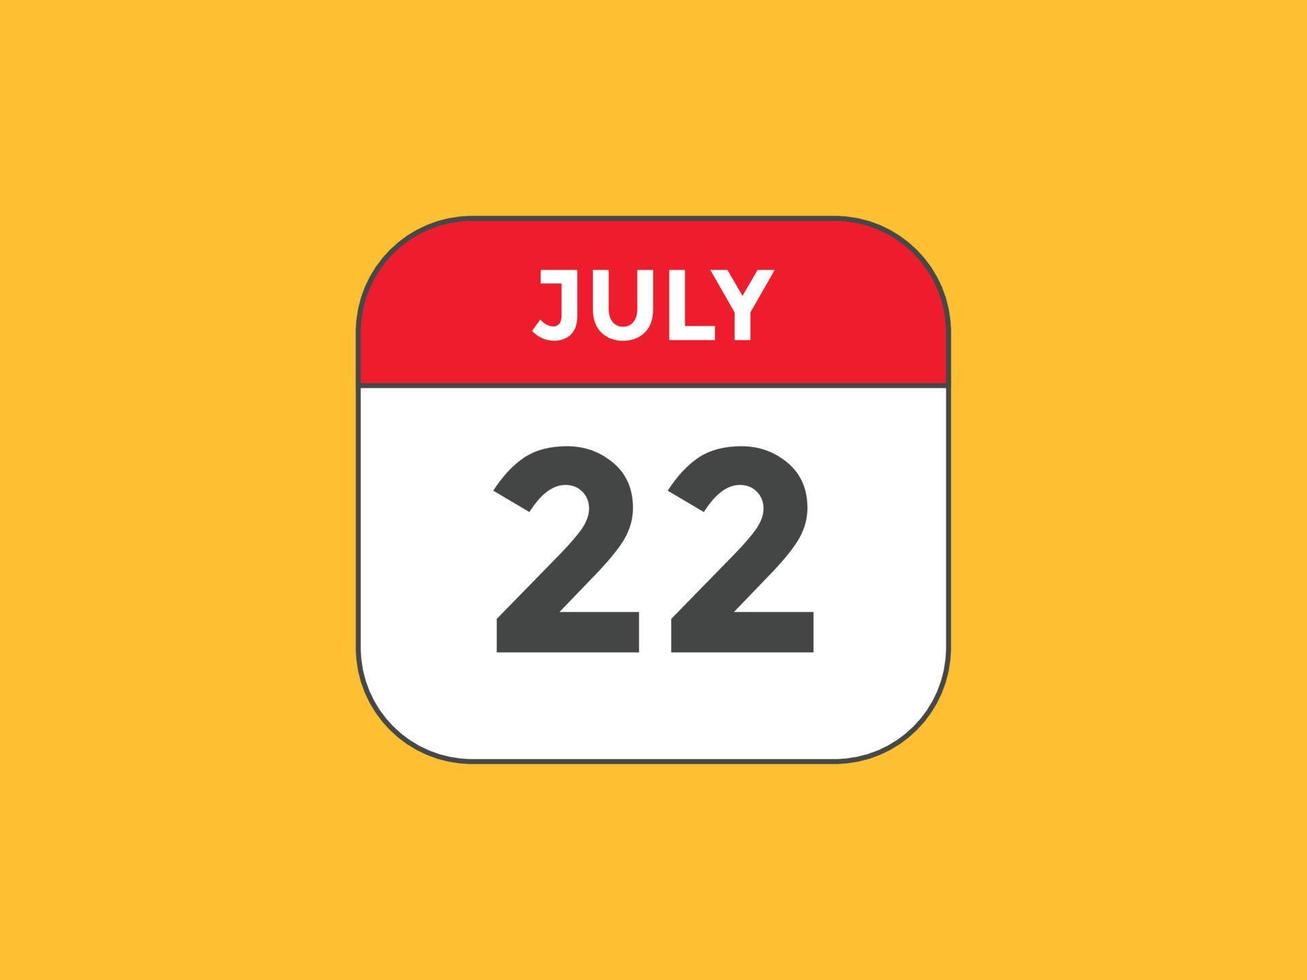 july 22 calendar reminder. 22th july daily calendar icon template. Calendar 22th july icon Design template. Vector illustration